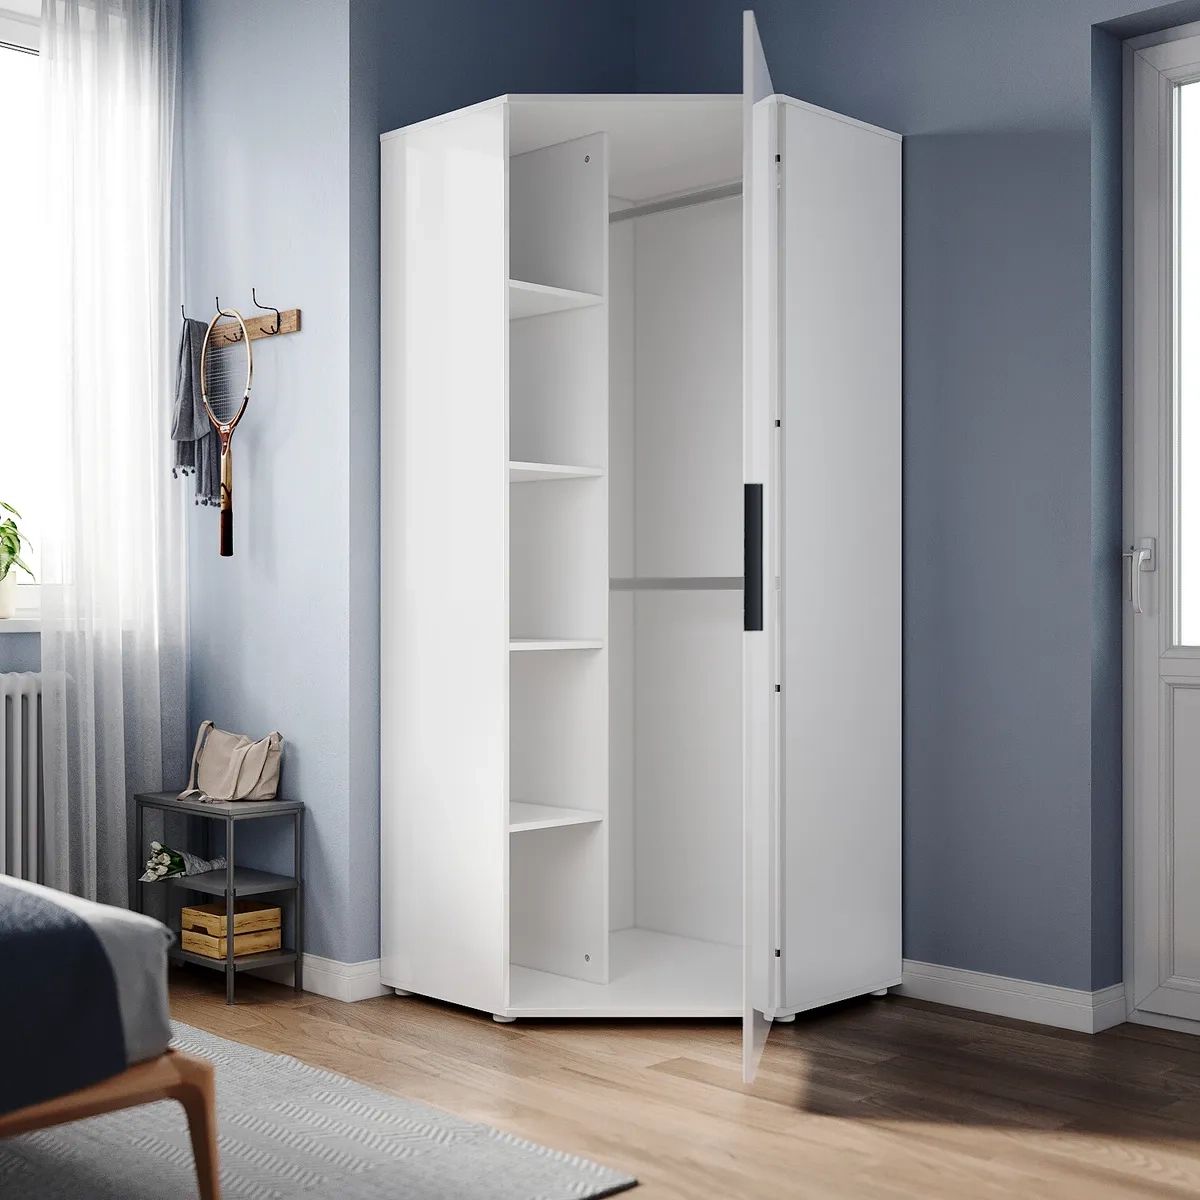 Modern White Corner Wardrobe High Gloss Door With Hanging Rail Bedroom  Furniture | Ebay For 2 Door Corner Wardrobes (View 11 of 15)